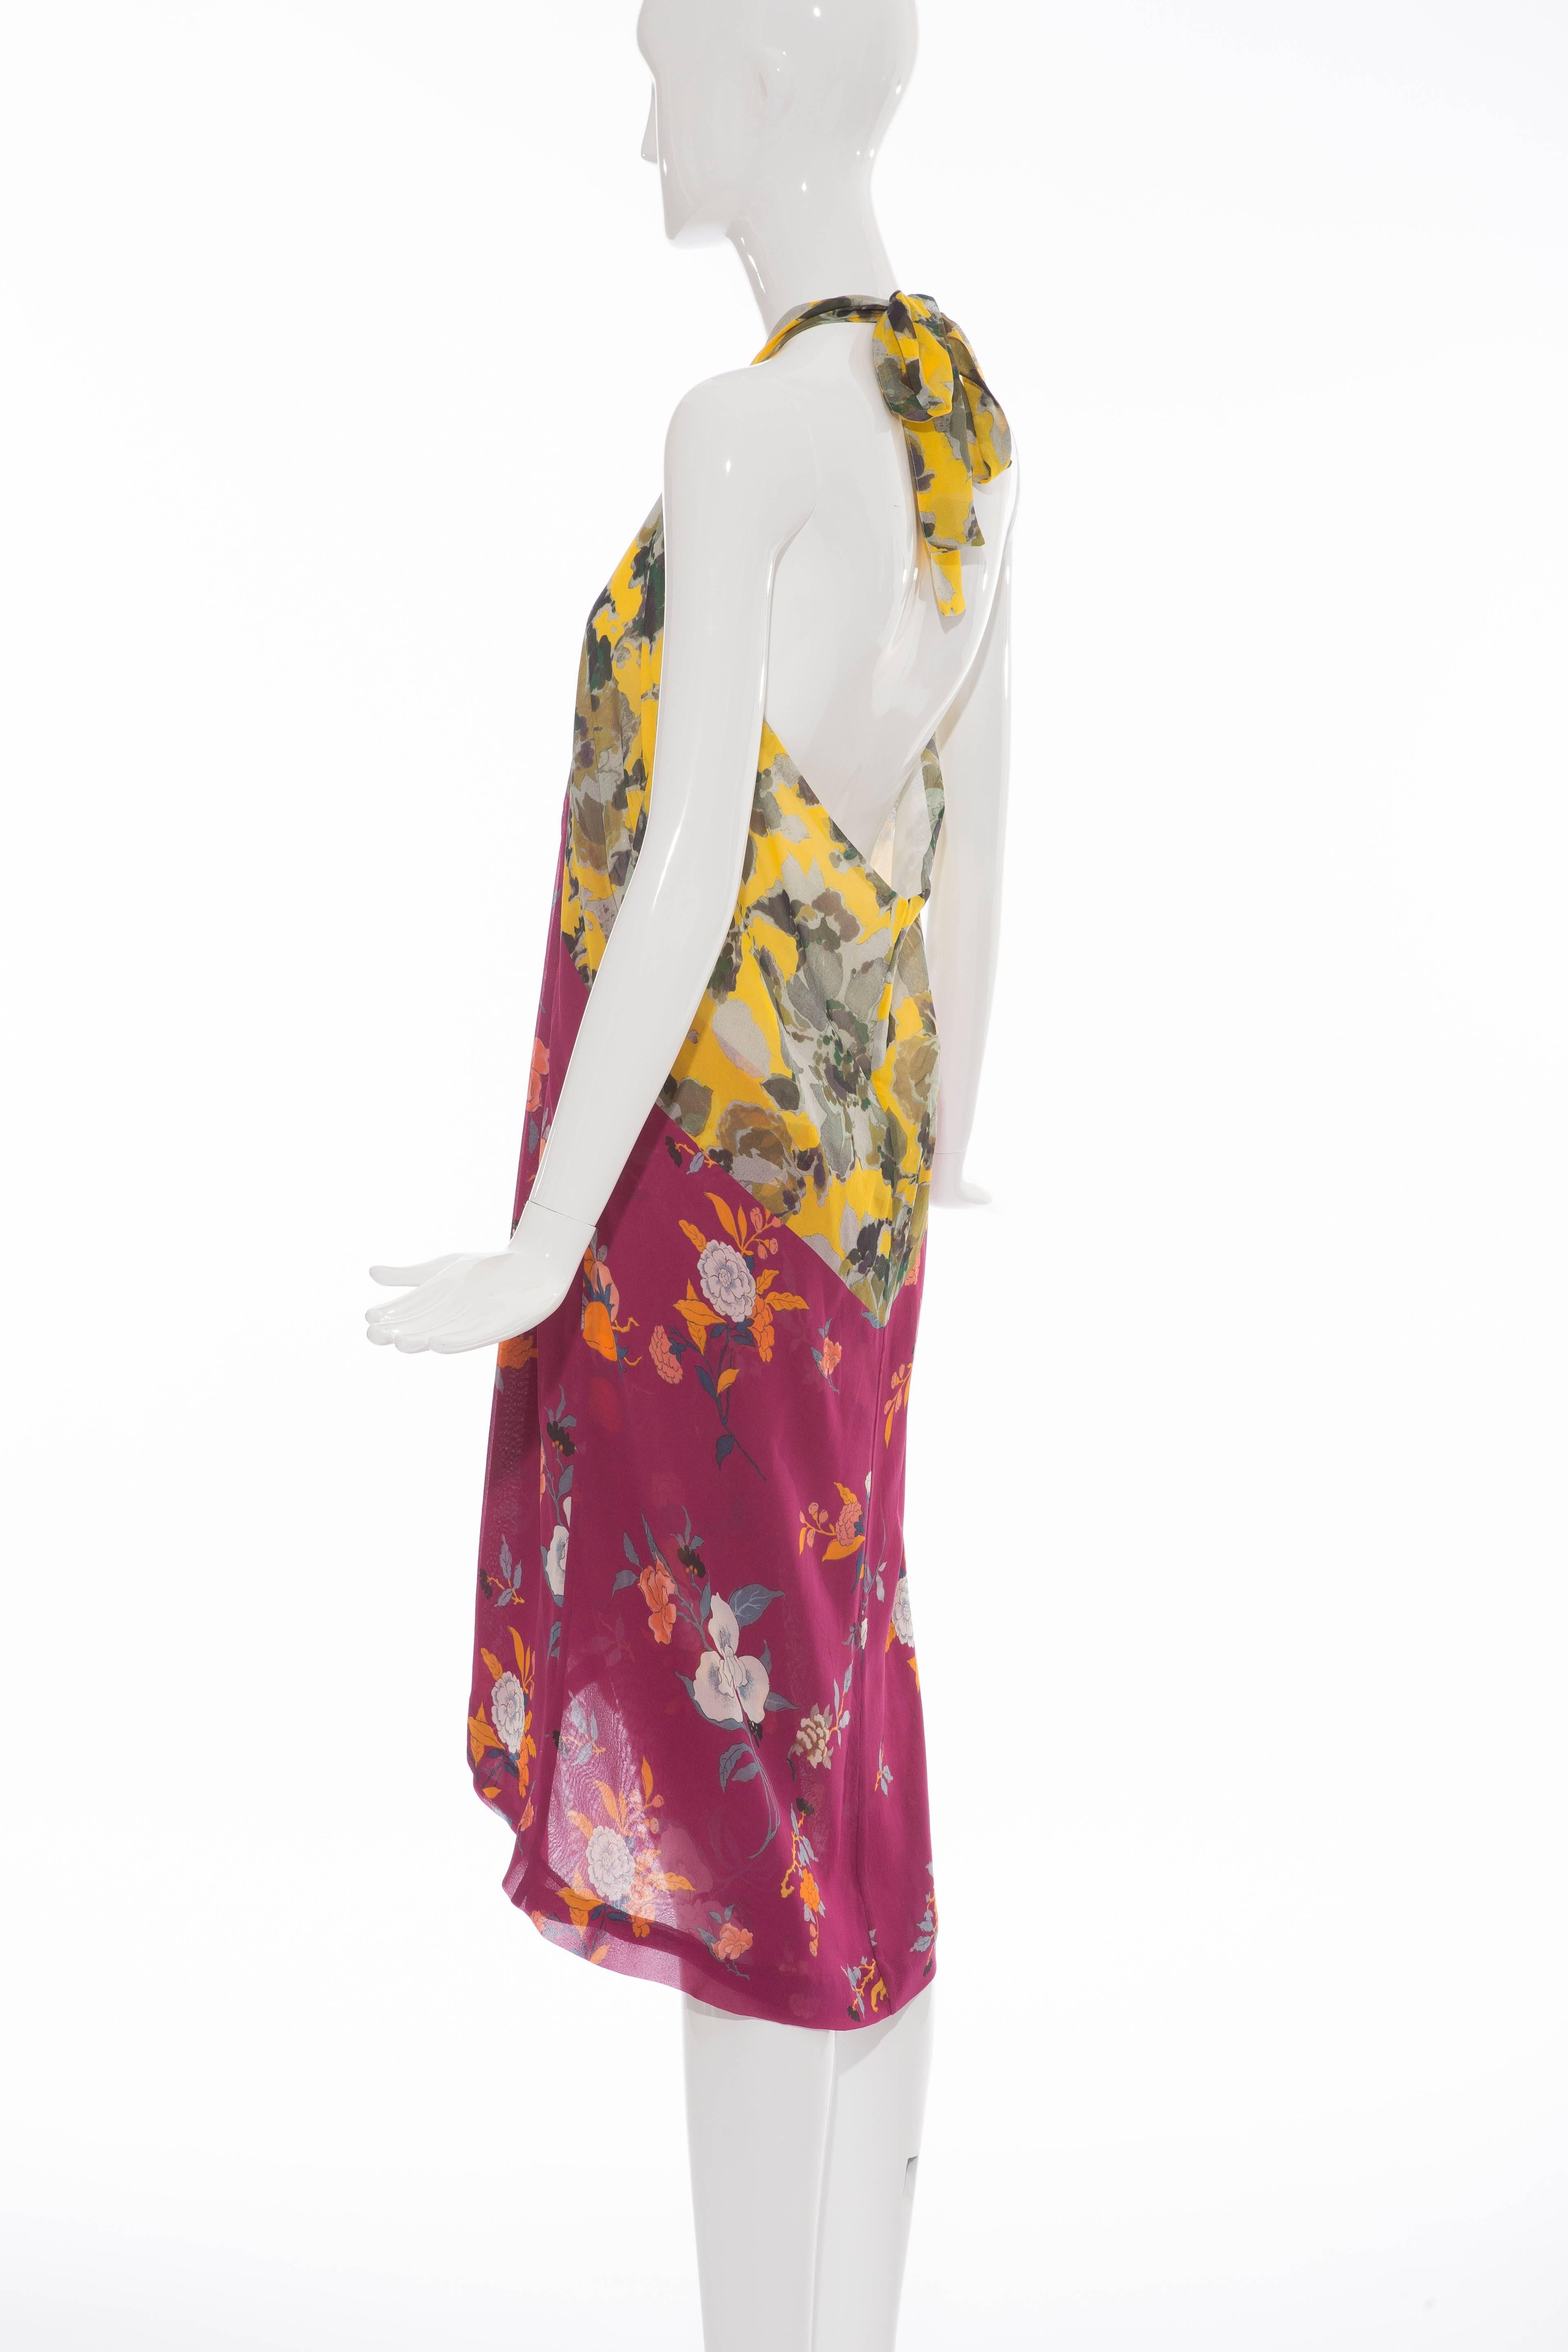 Dries Van Noten Floral Silk Chiffon Halter Dress, Spring - Summer 2008 In Excellent Condition For Sale In Cincinnati, OH